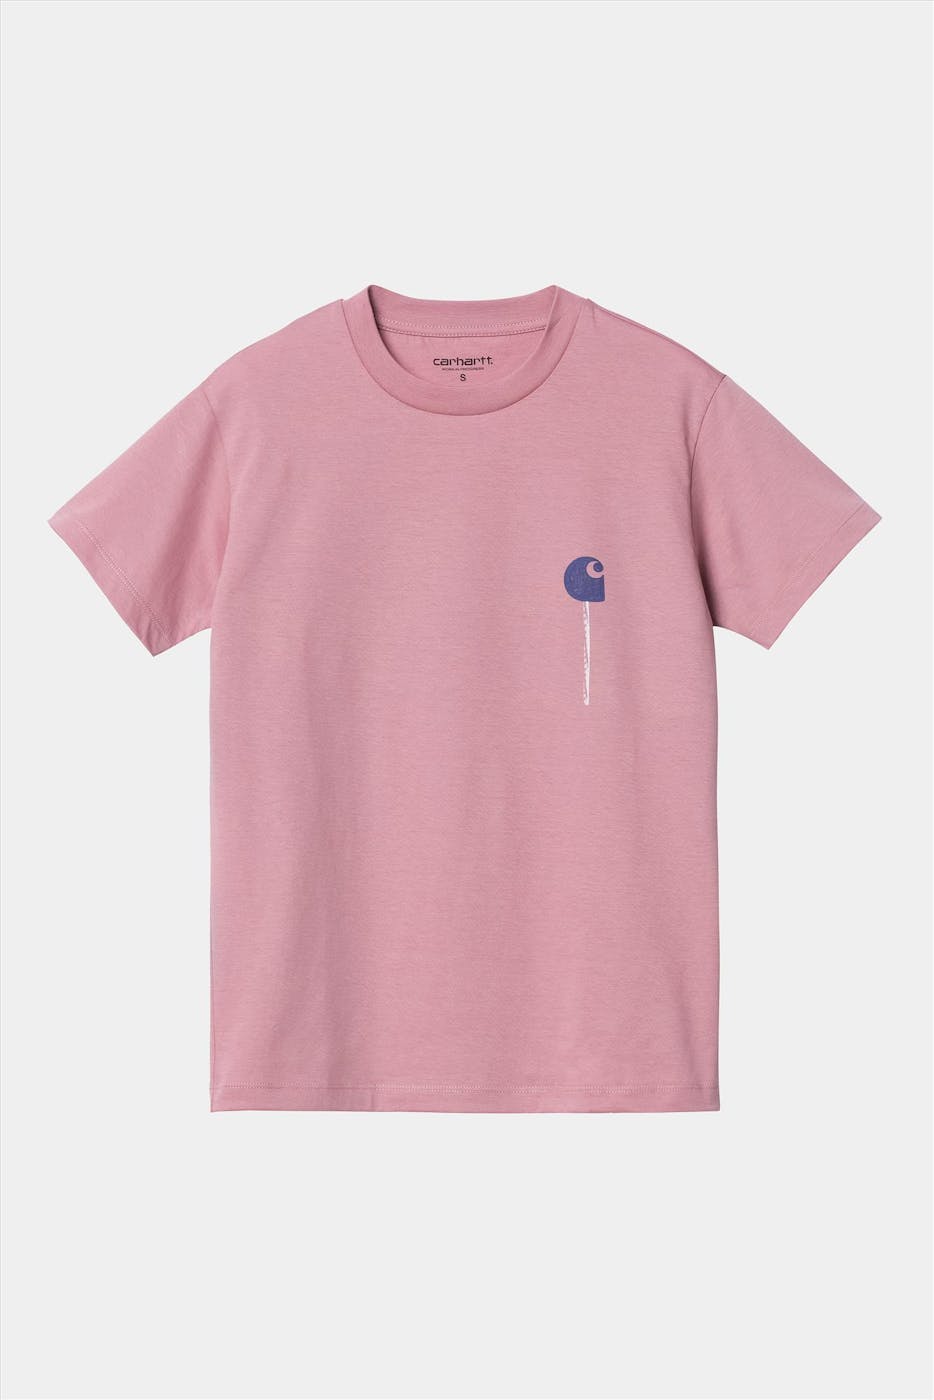 Carhartt WIP - Roze Lolly T-shirt